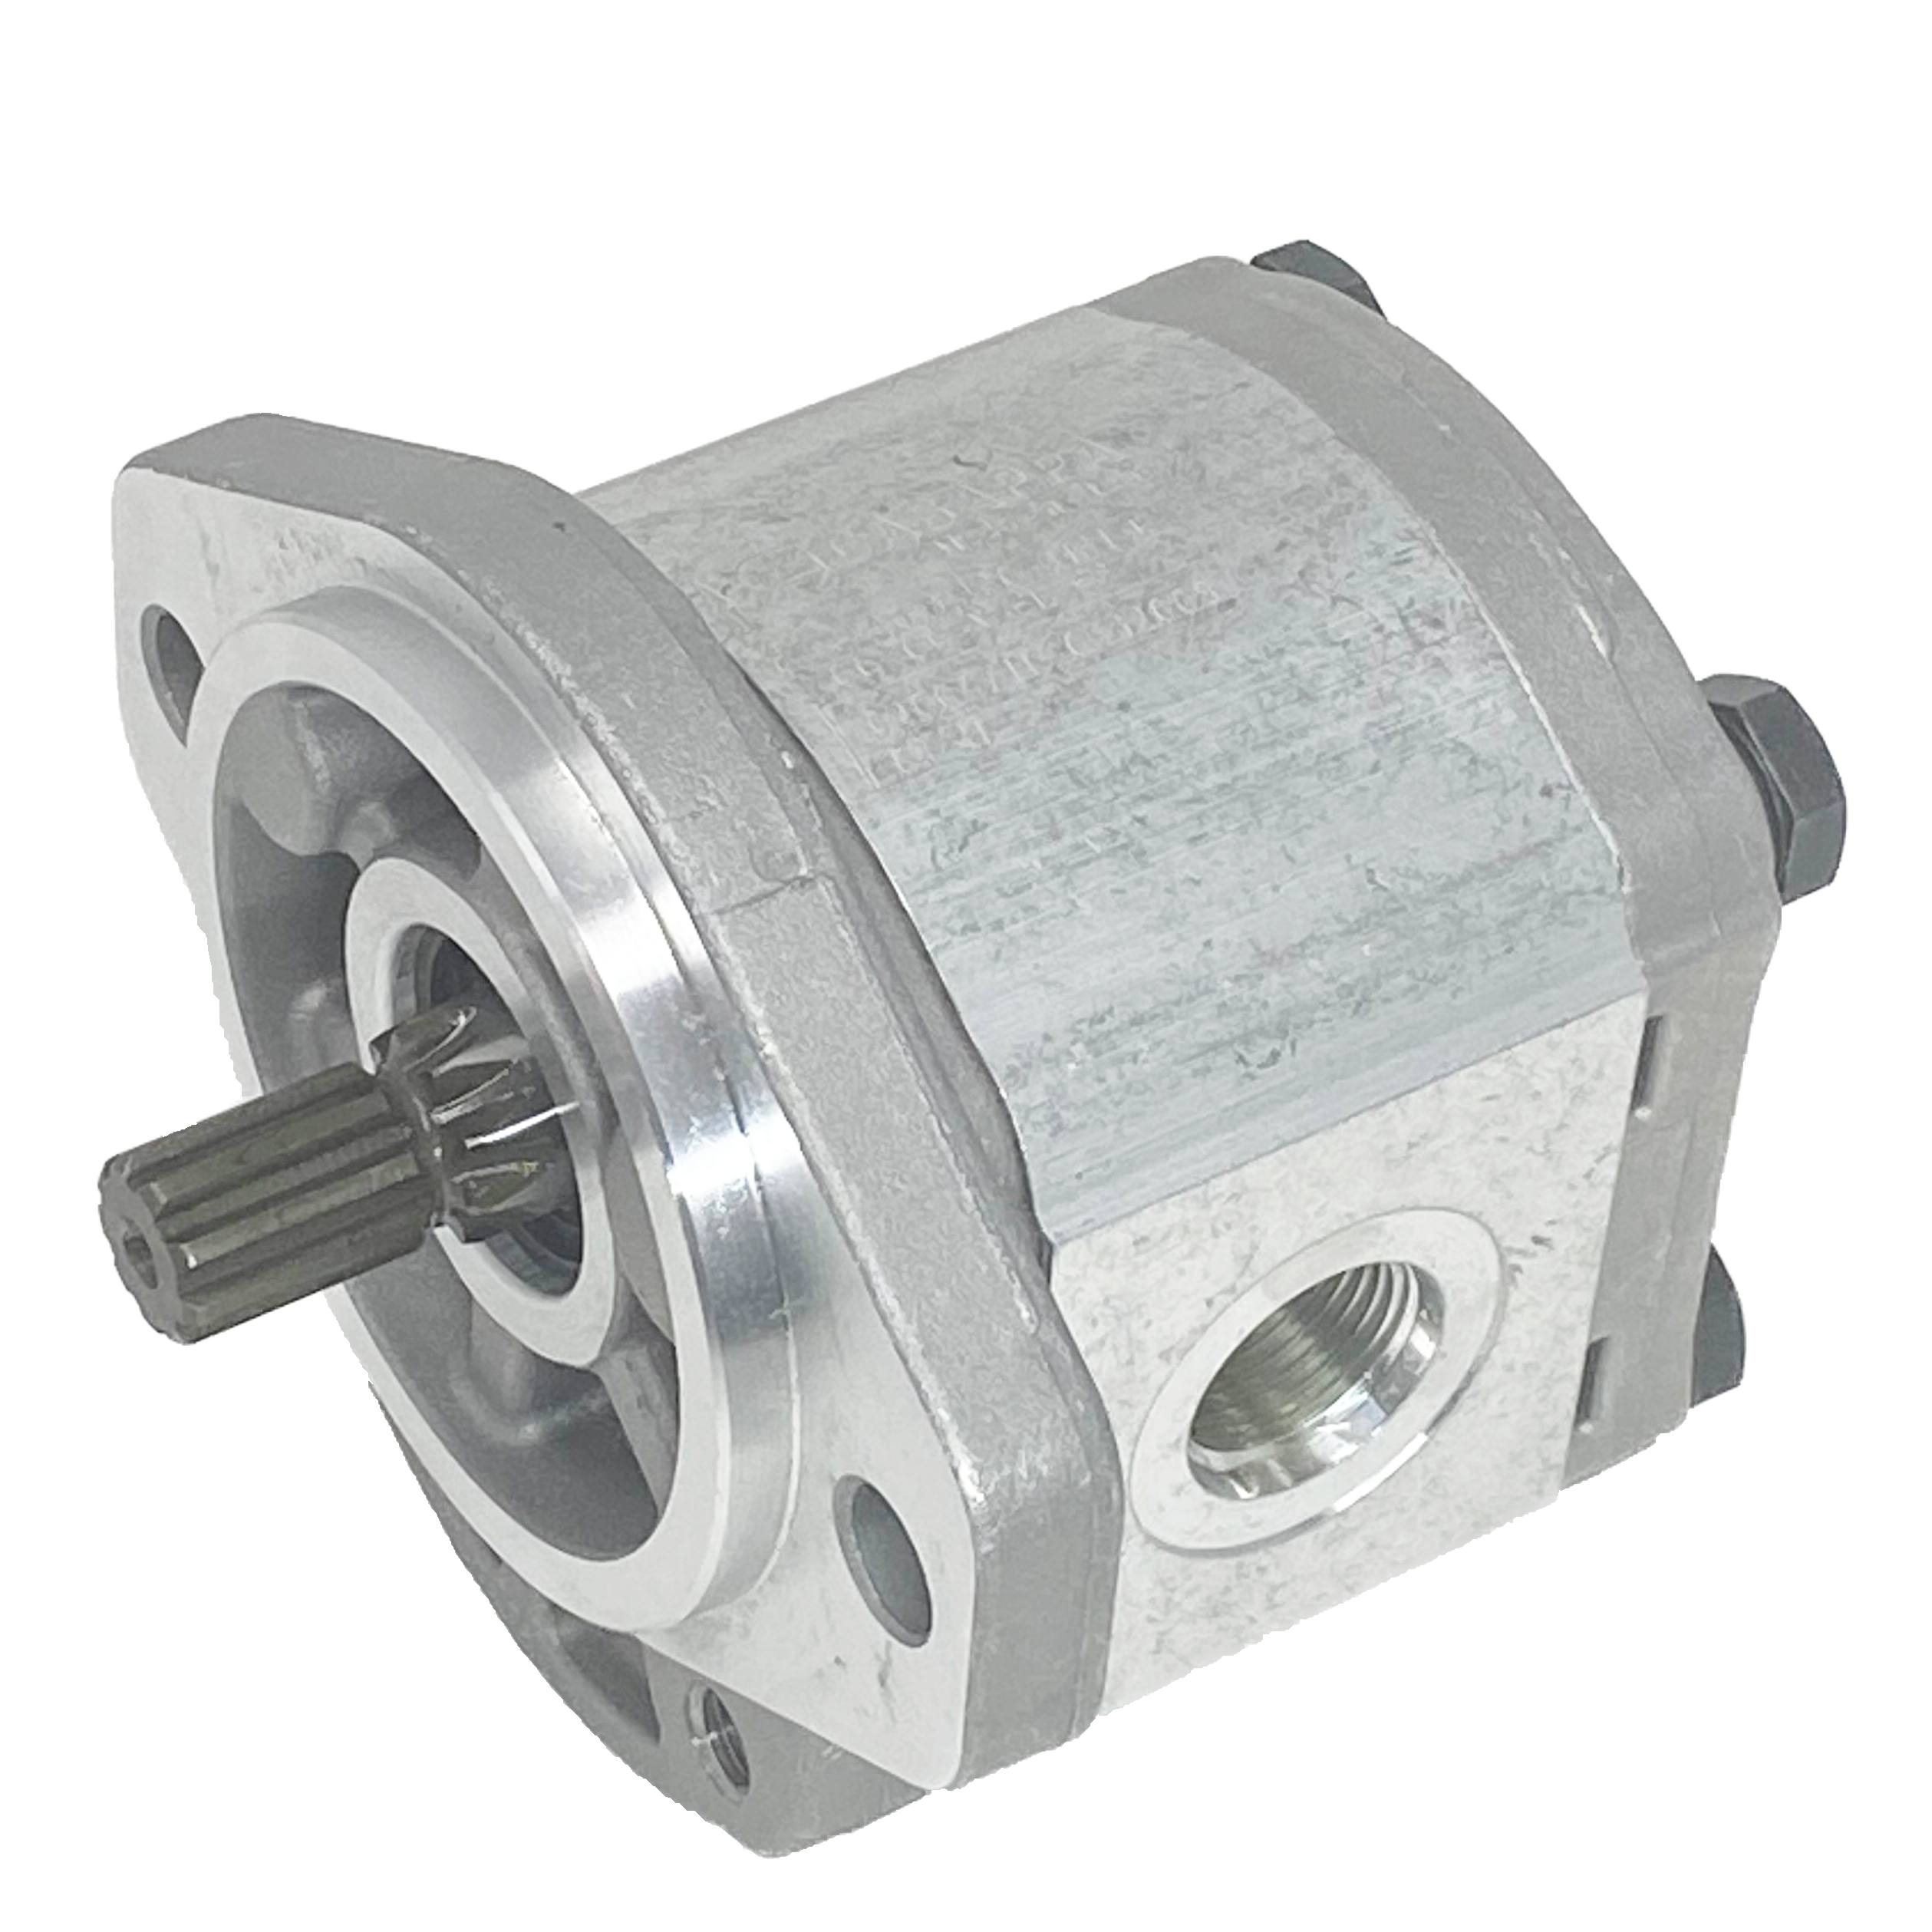 PLM20.9B0-03S1-LOC/OC-N-EL : Casappa Polaris Gear Motor, 9.17cc, 3625psi Rated, 3500RPM, Reversible Interior Drain, 9T 16/32dp Shaft, SAE A 2-Bolt Flange, 0.625 (5/8") #10 SAE Inlet, 0.625 (5/8") #10 SAE Outlet, Aluminum Body & Flange